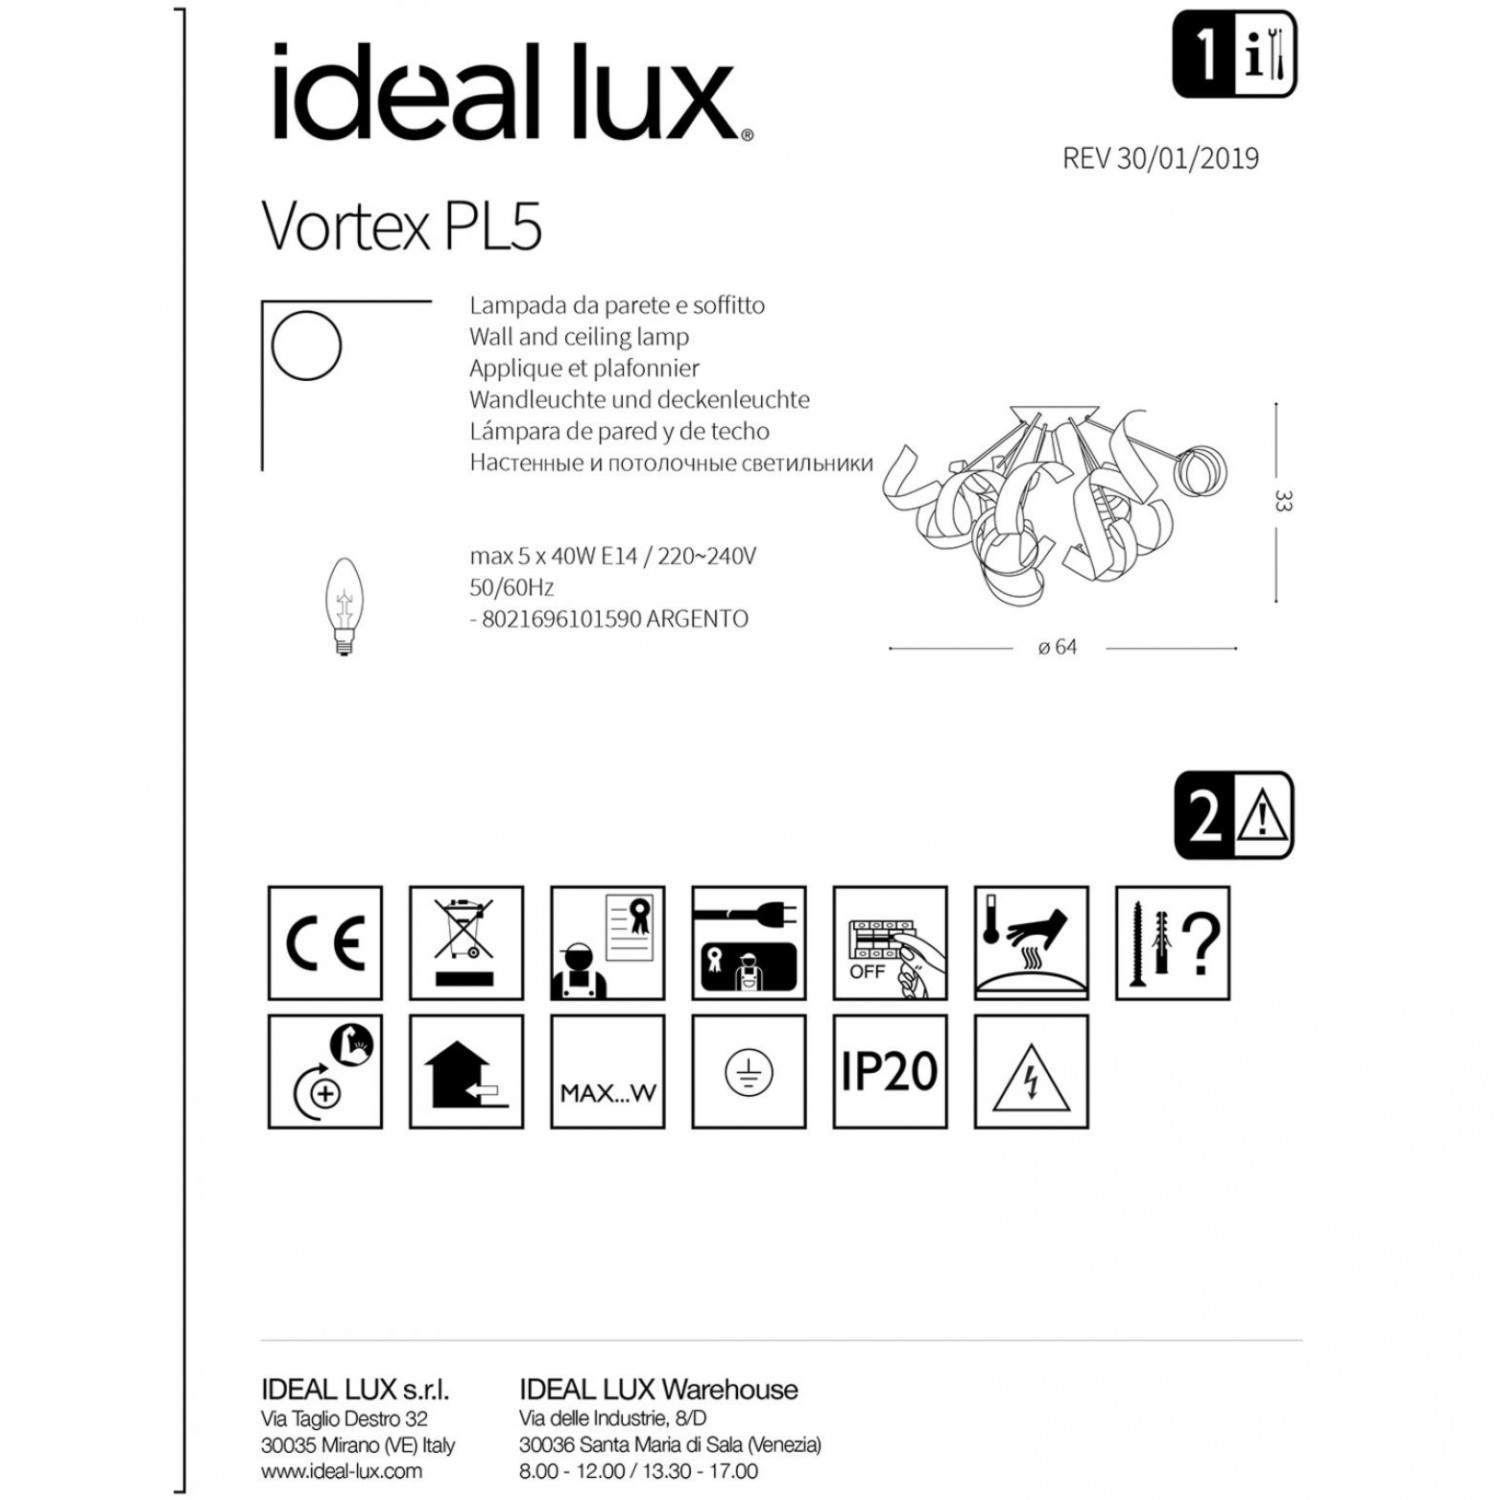 Люстра Ideal Lux VORTEX PL5 ARGENTO 101590